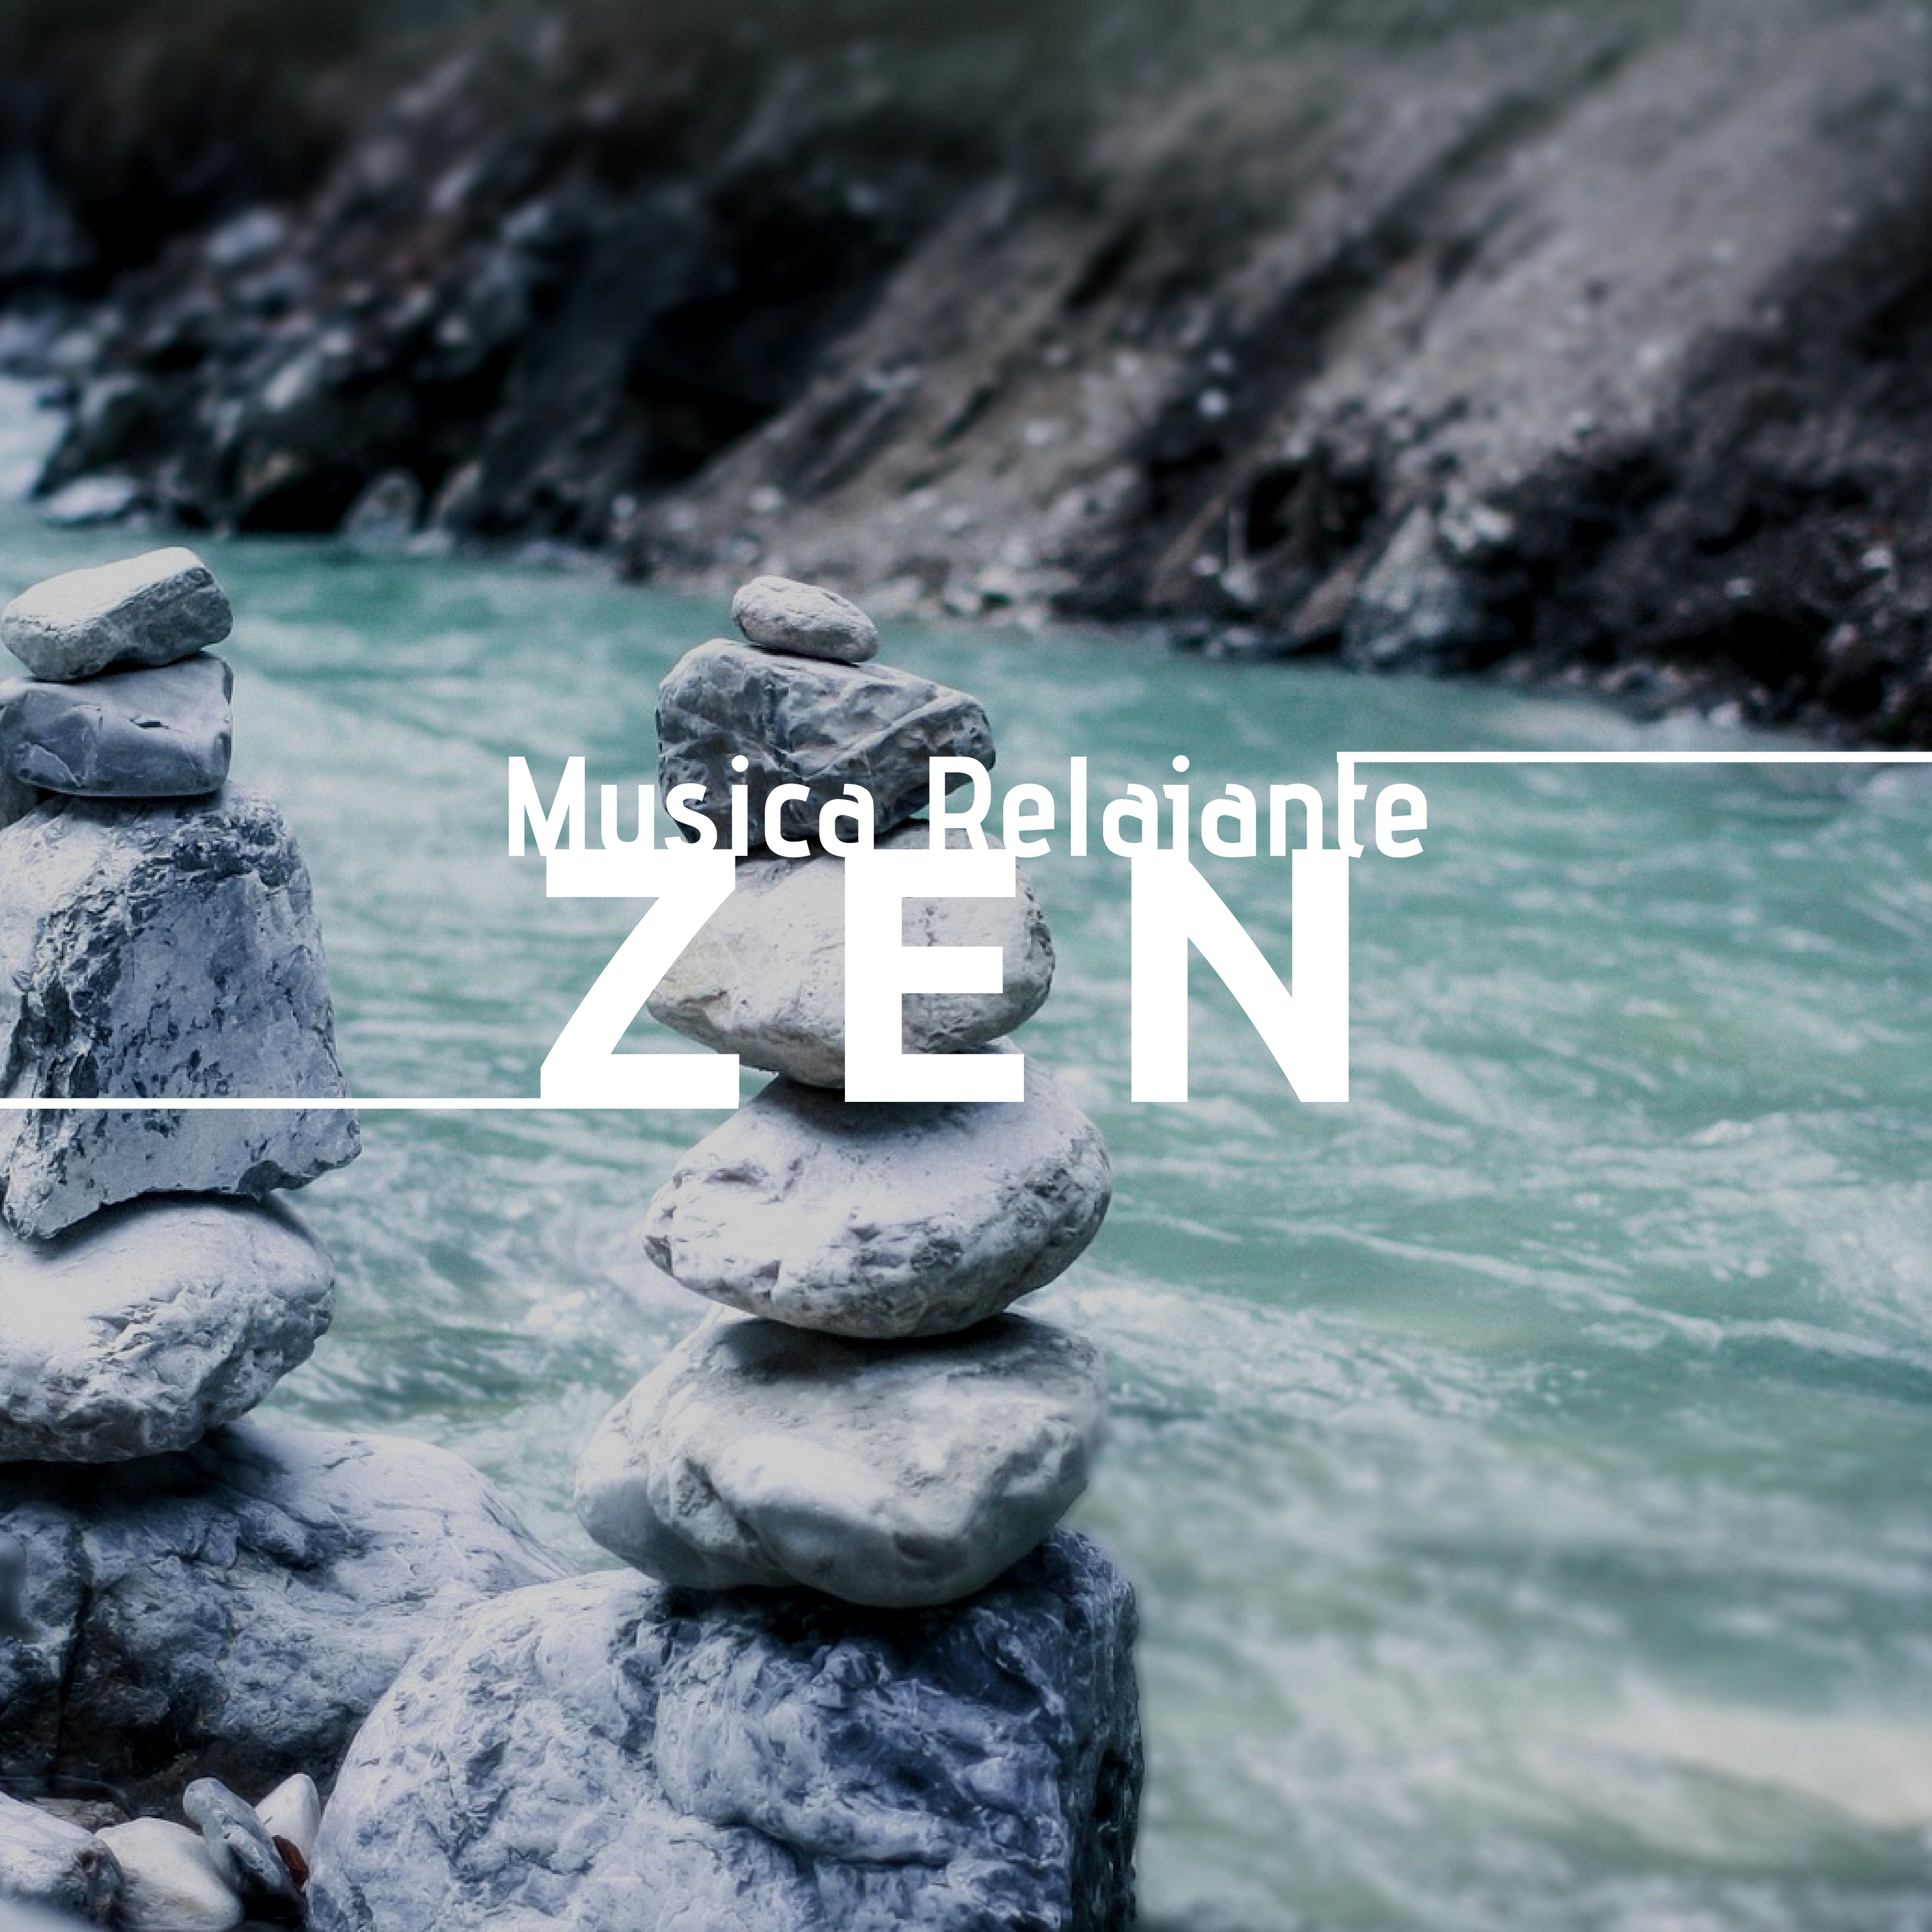 Musica Relajante Zen